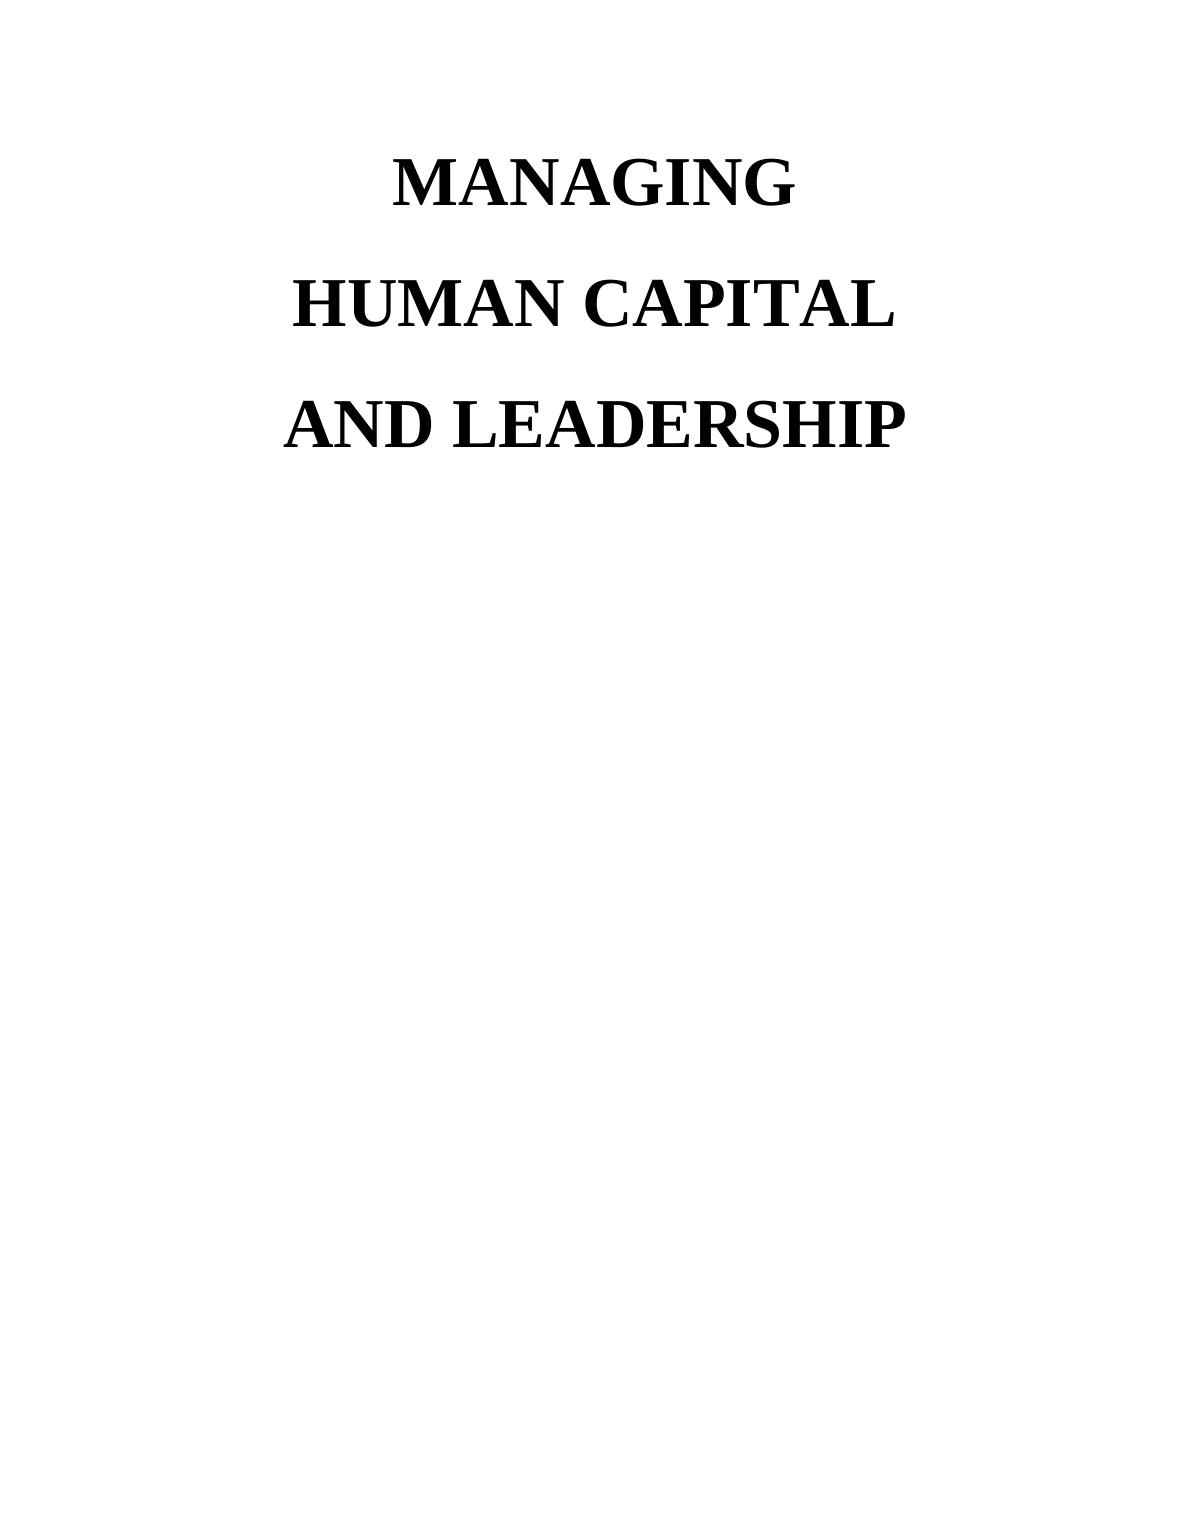 Managing Human Capital & Leadership: Assignment_1